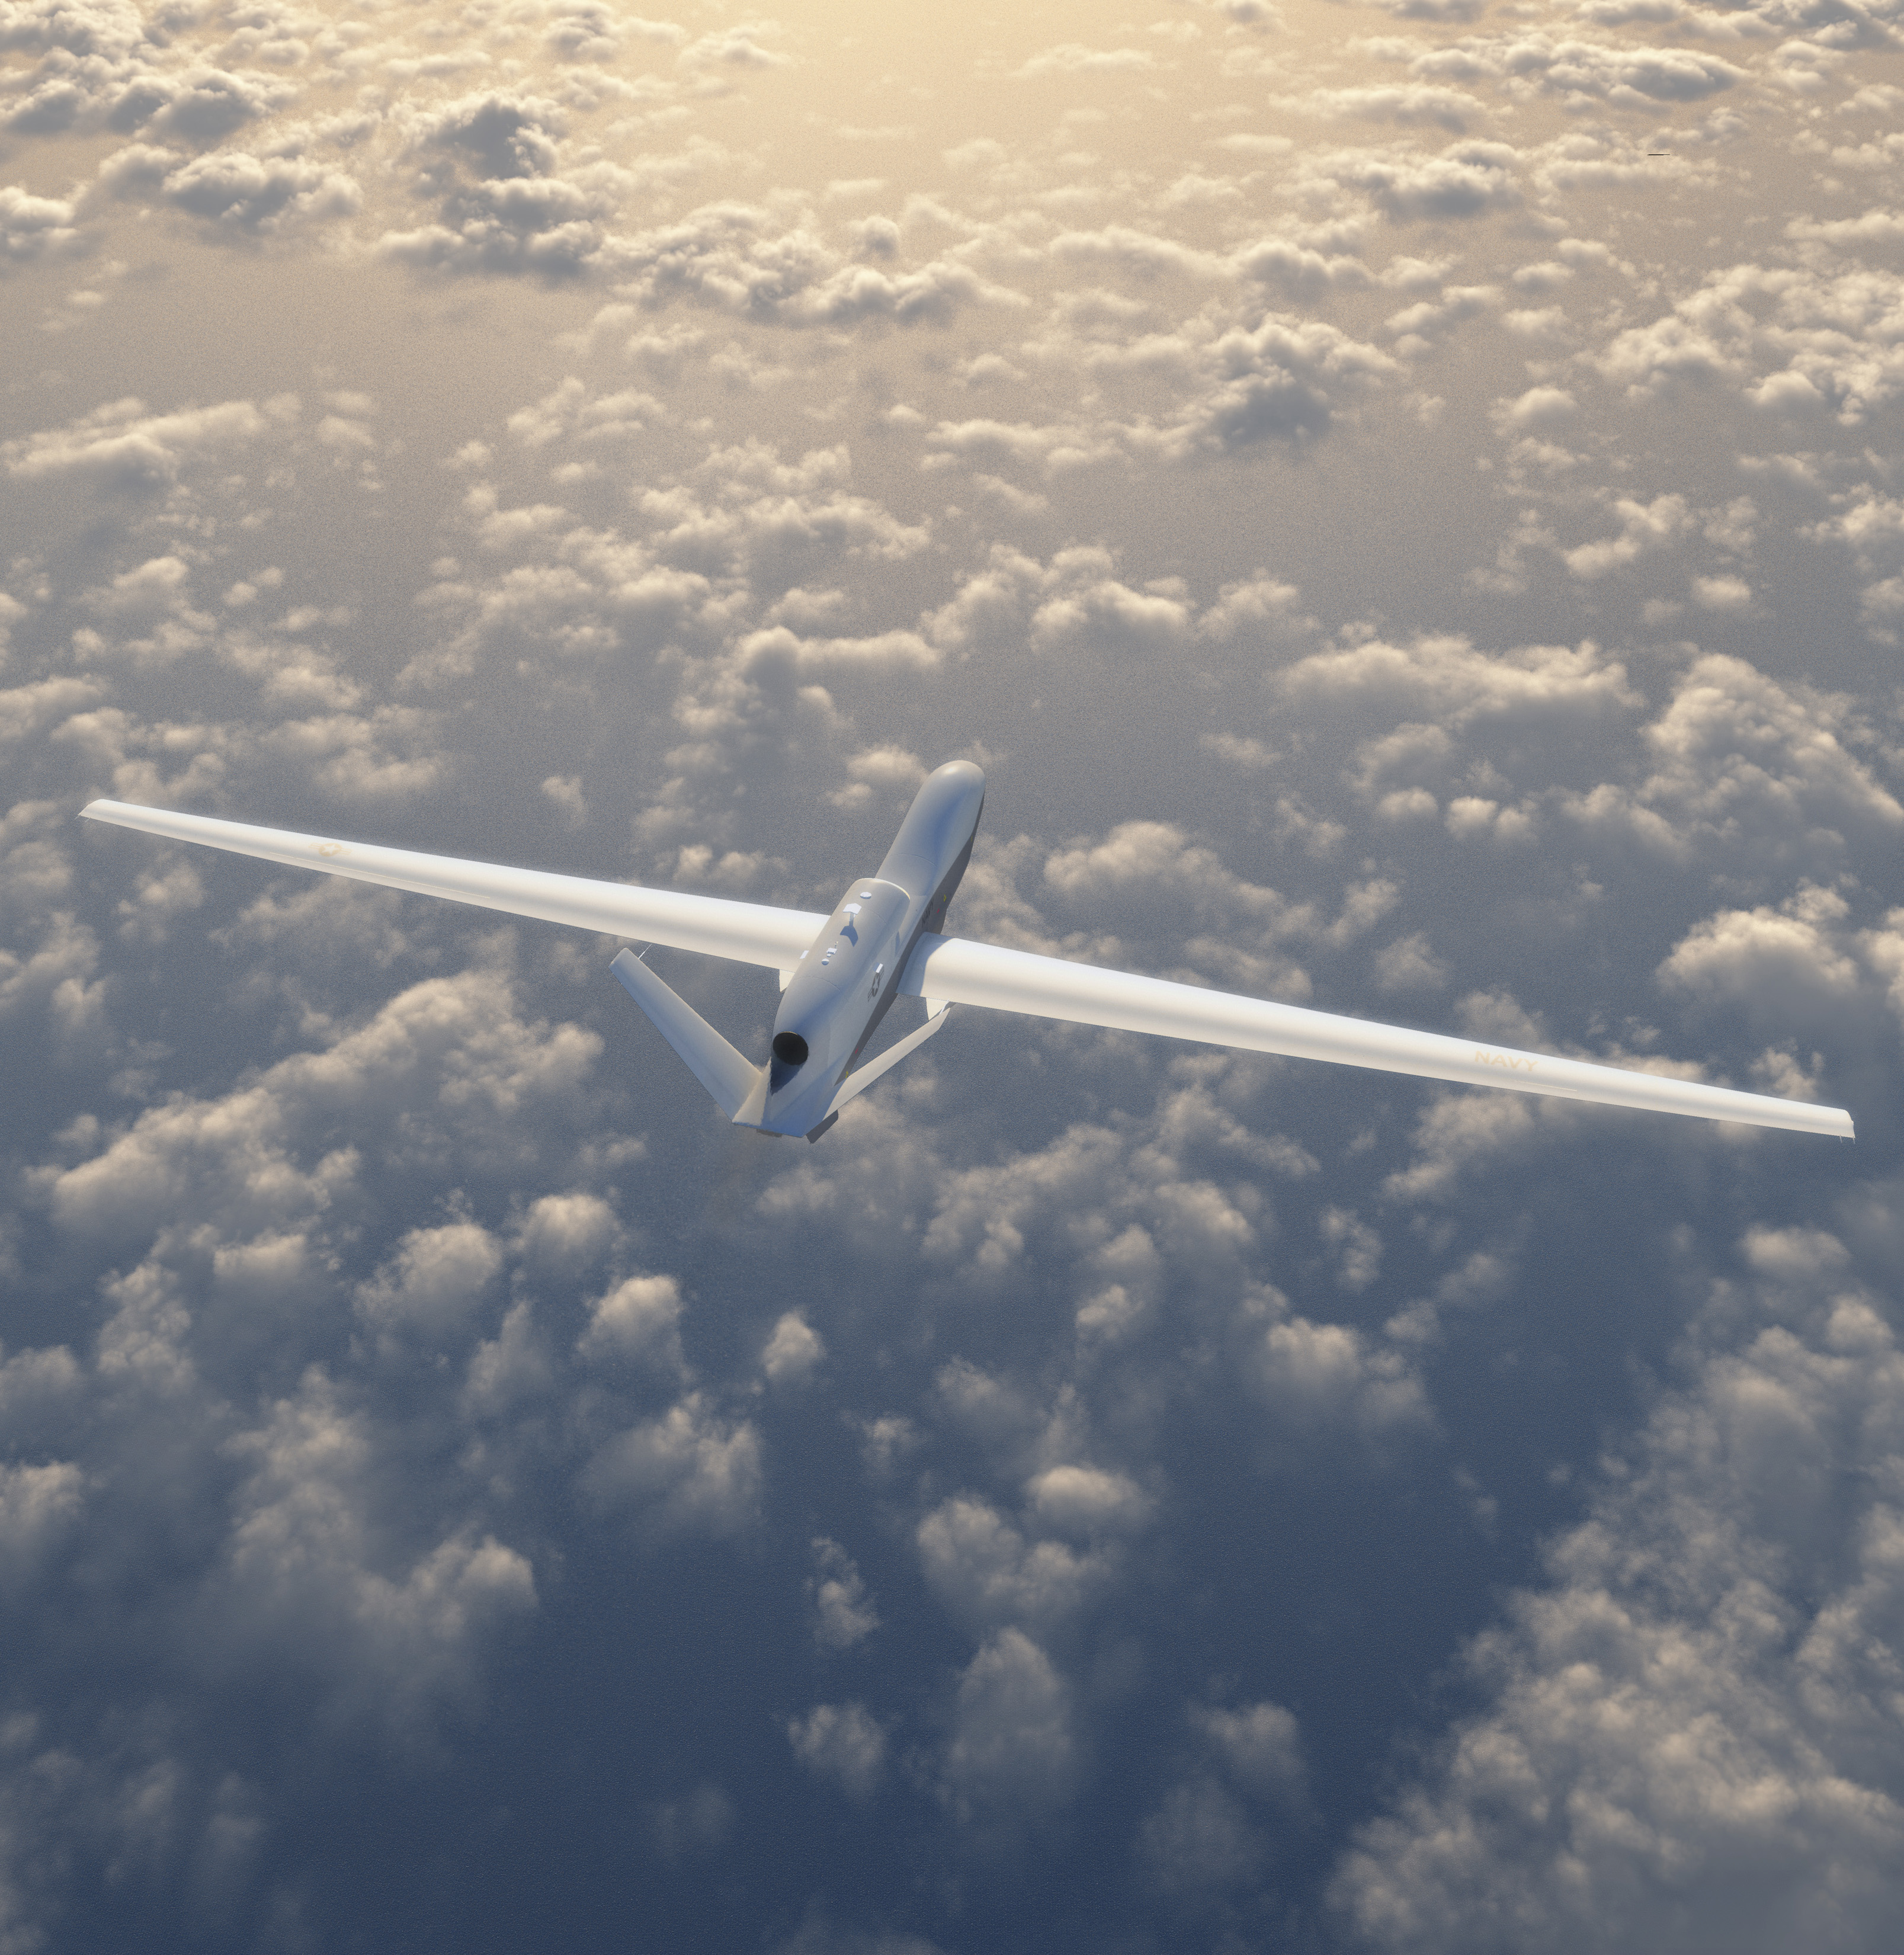 Australia is expected to soon receive the MQ-4C Triton UAV